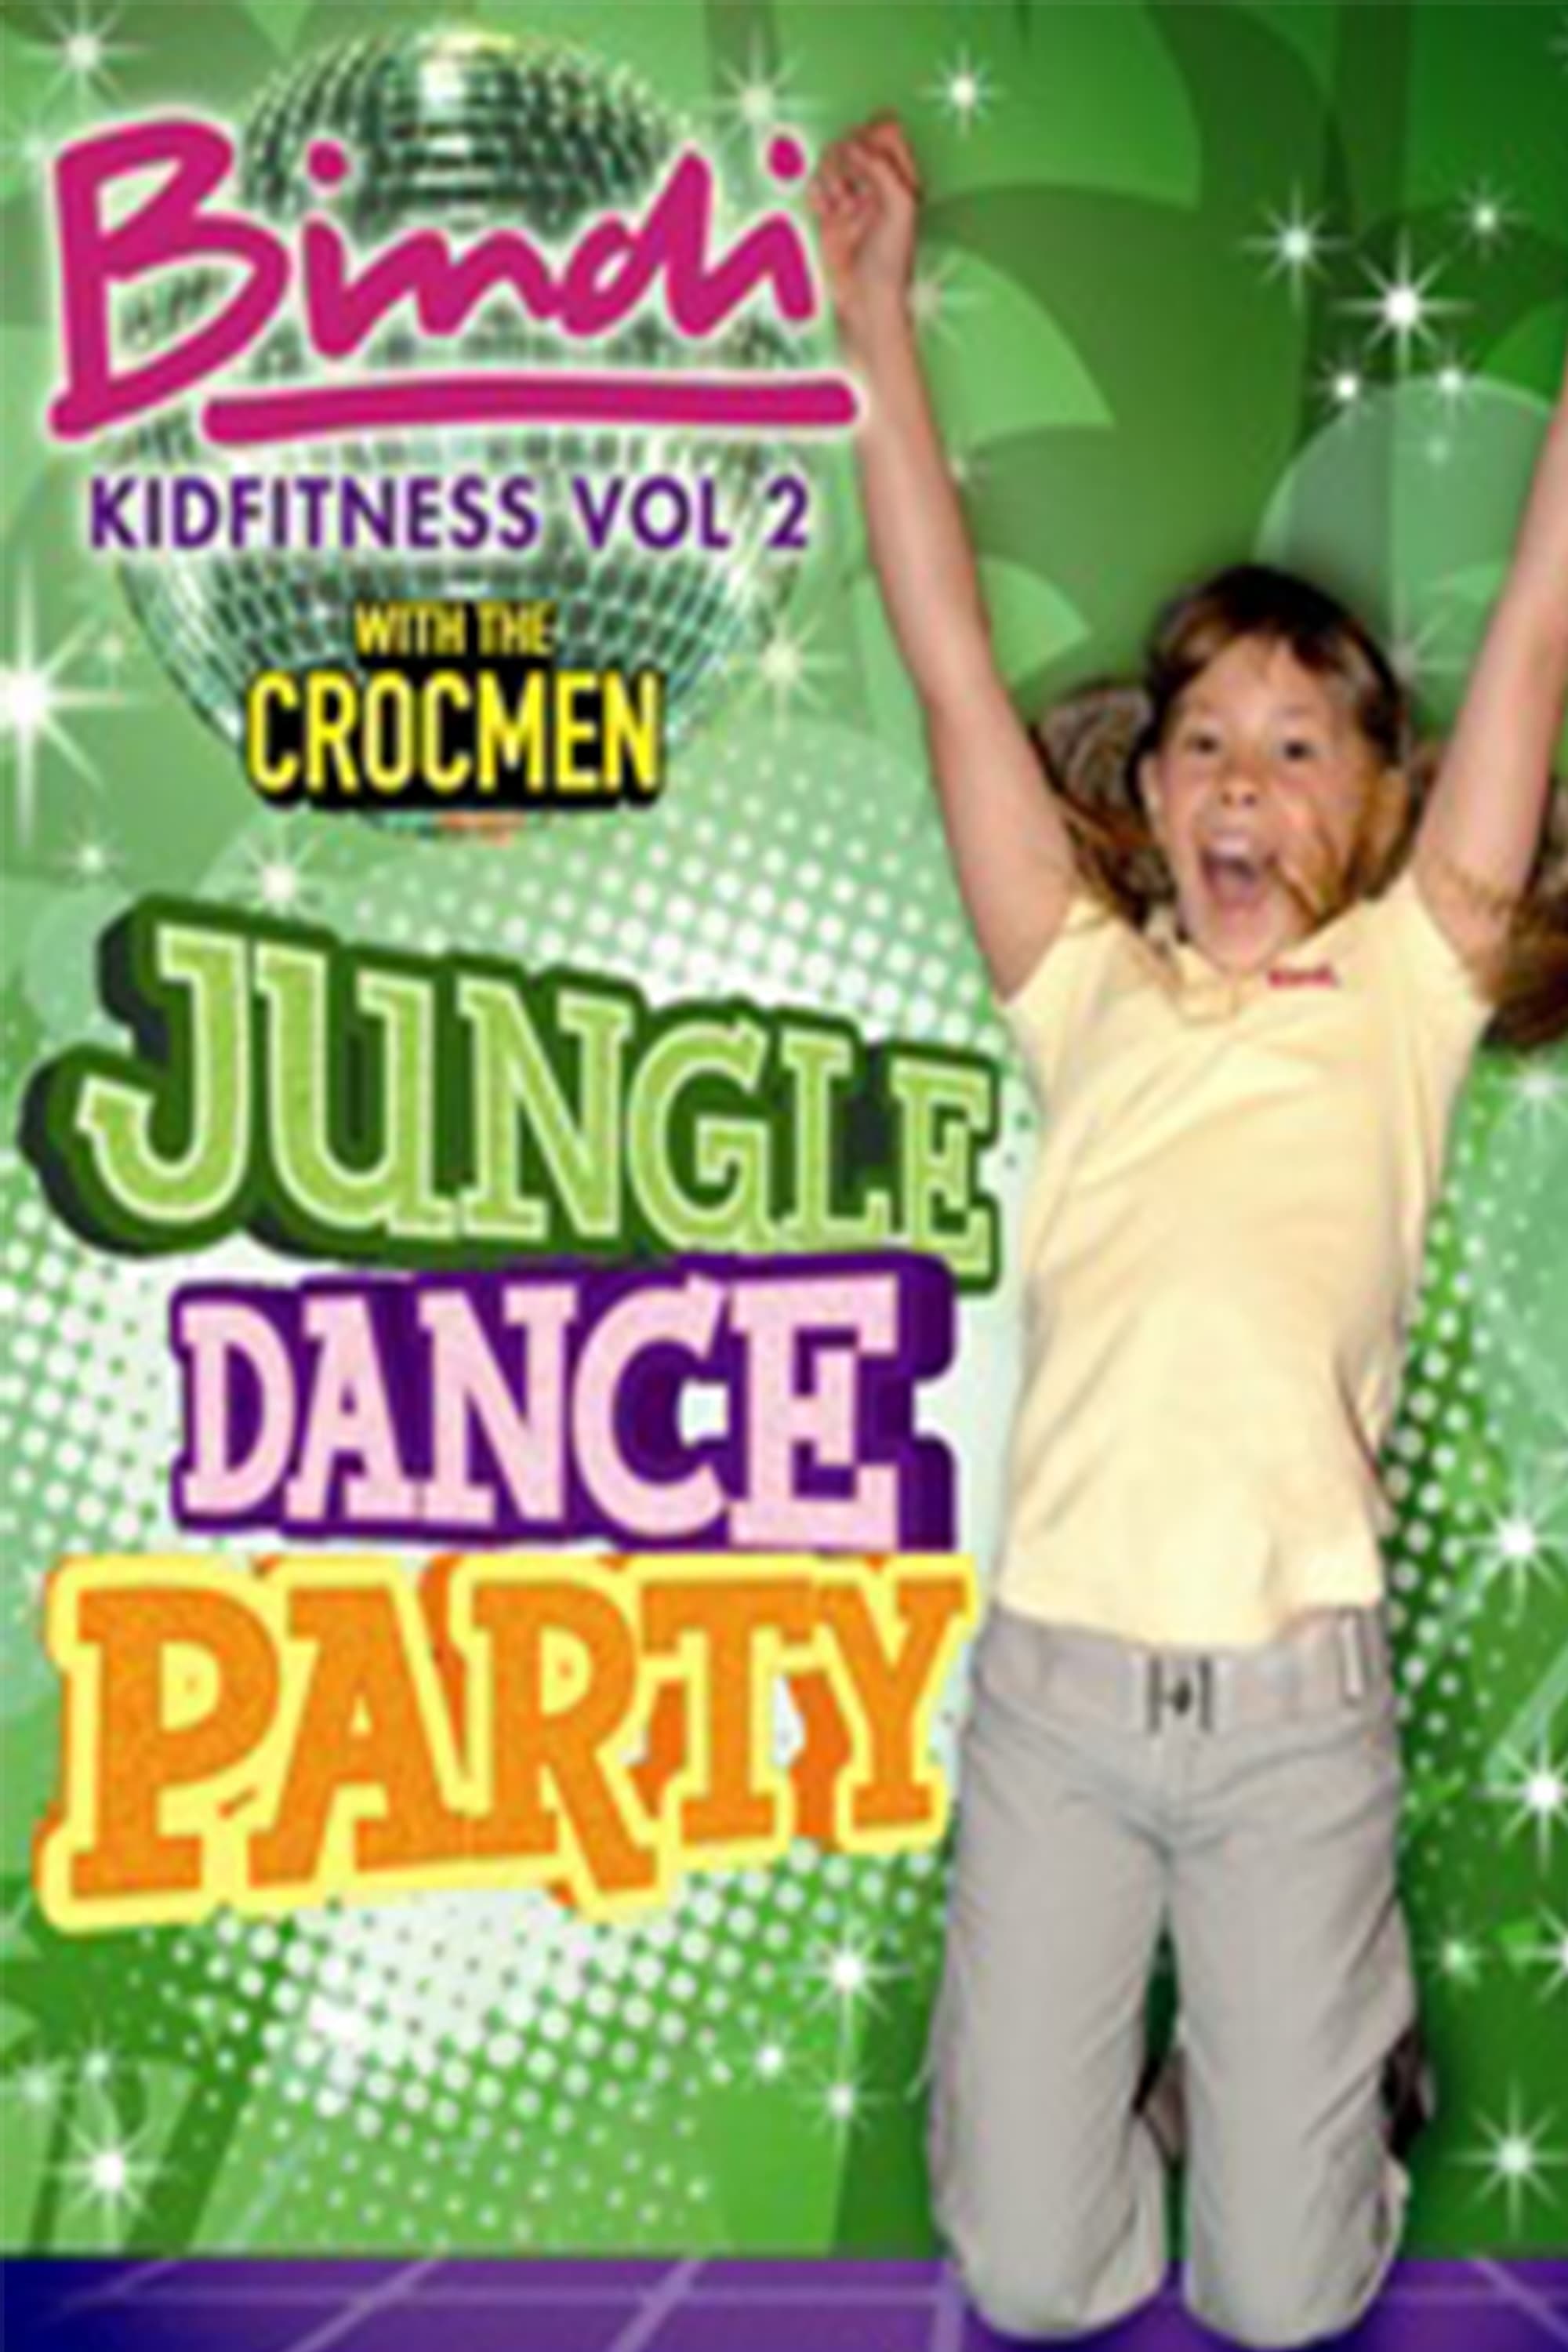 Bindi kid fitness. Vol. 2., Jungle dance party